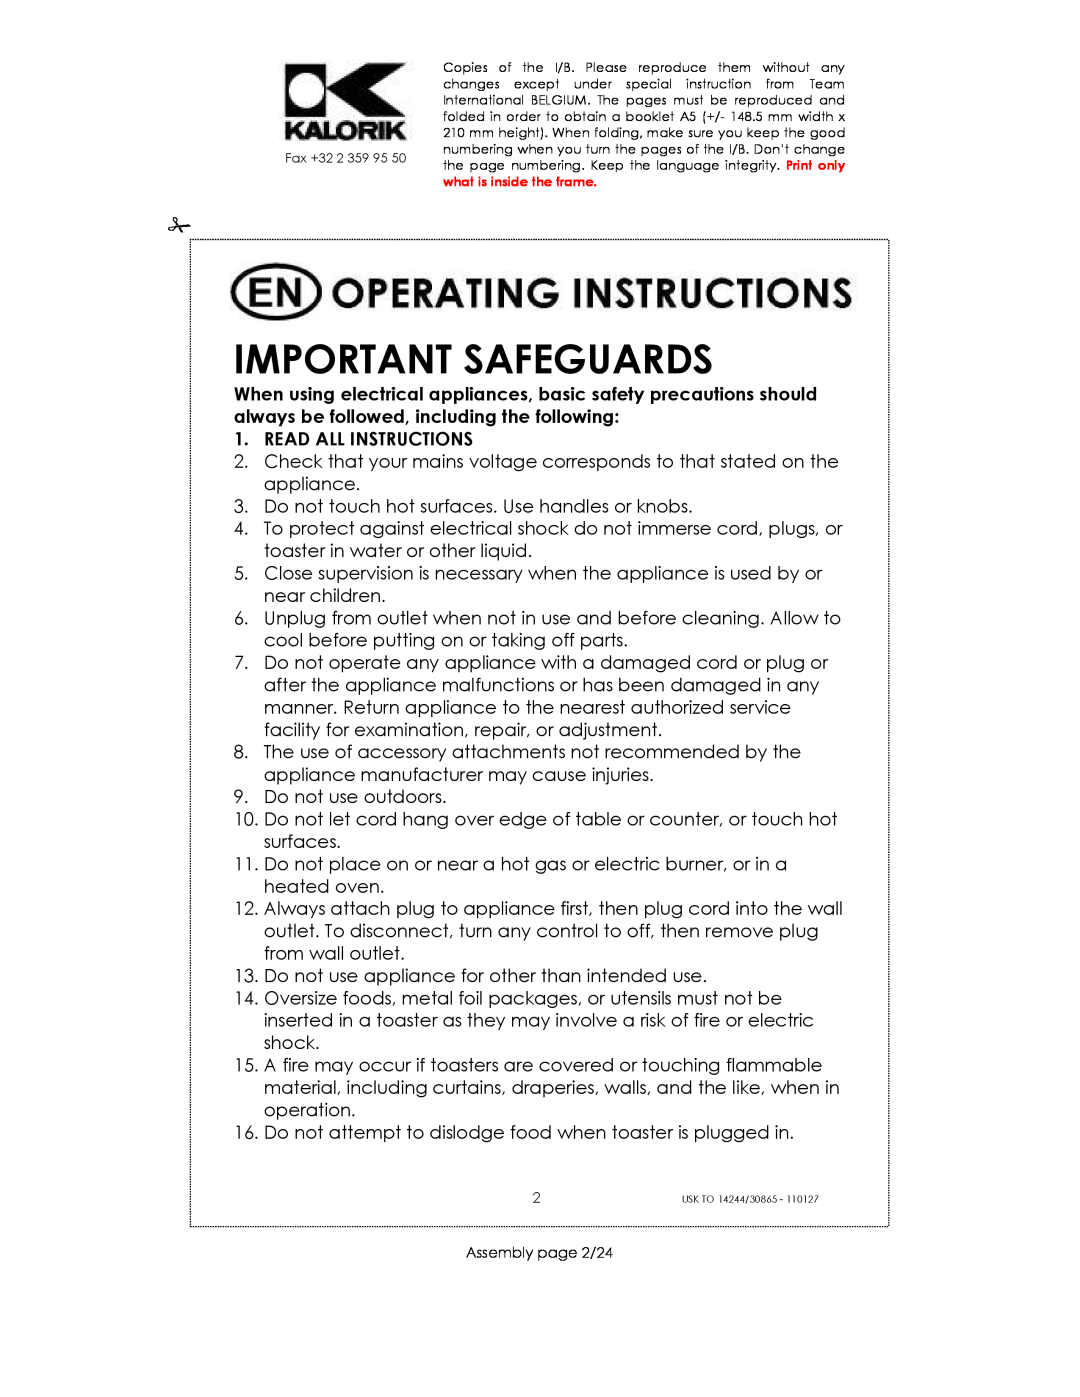 Kalorik 35481, 30865, 14244 manual Important Safeguards, Read All Instructions 